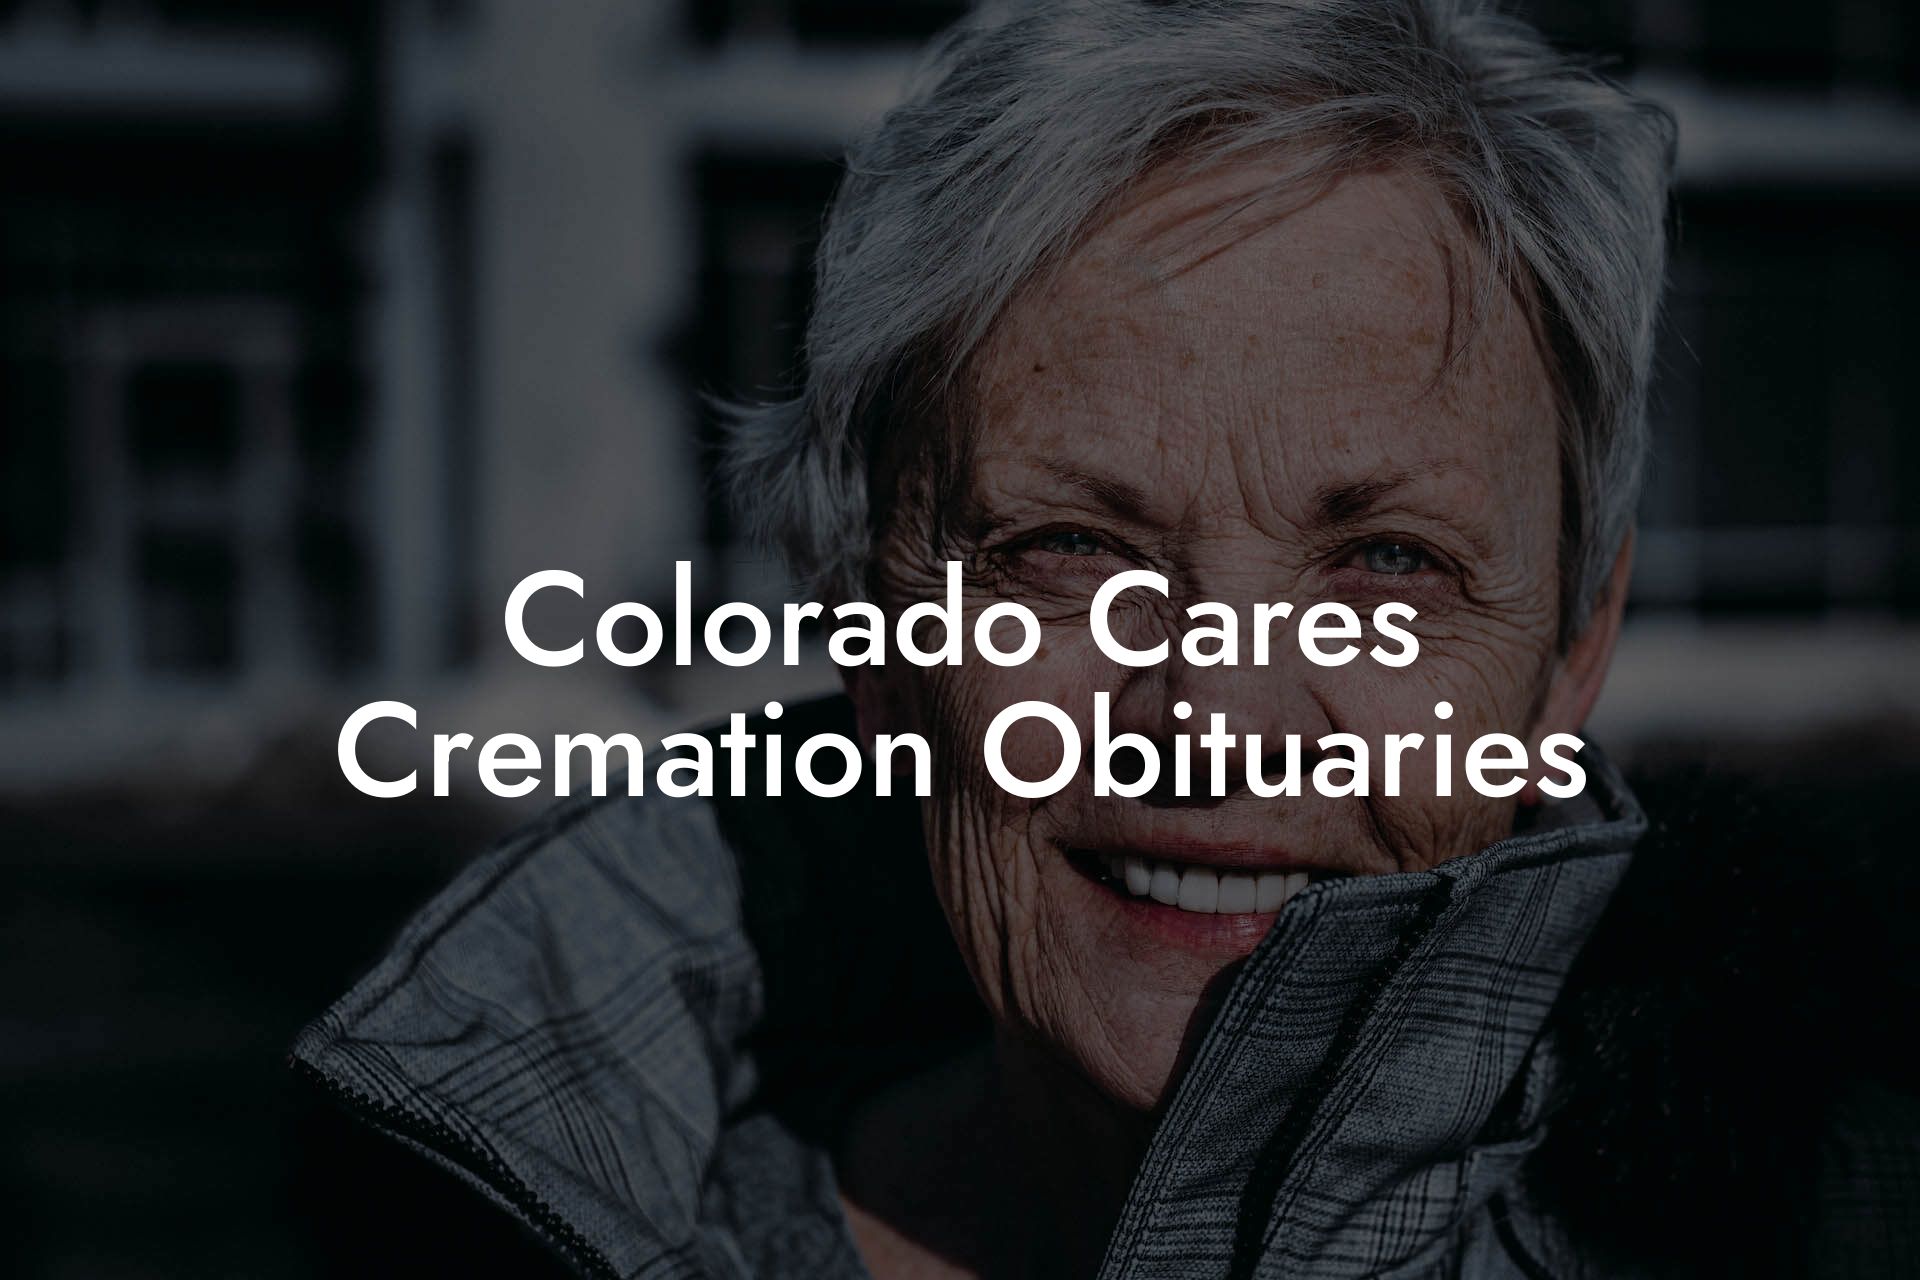 Colorado Cares Cremation Obituaries